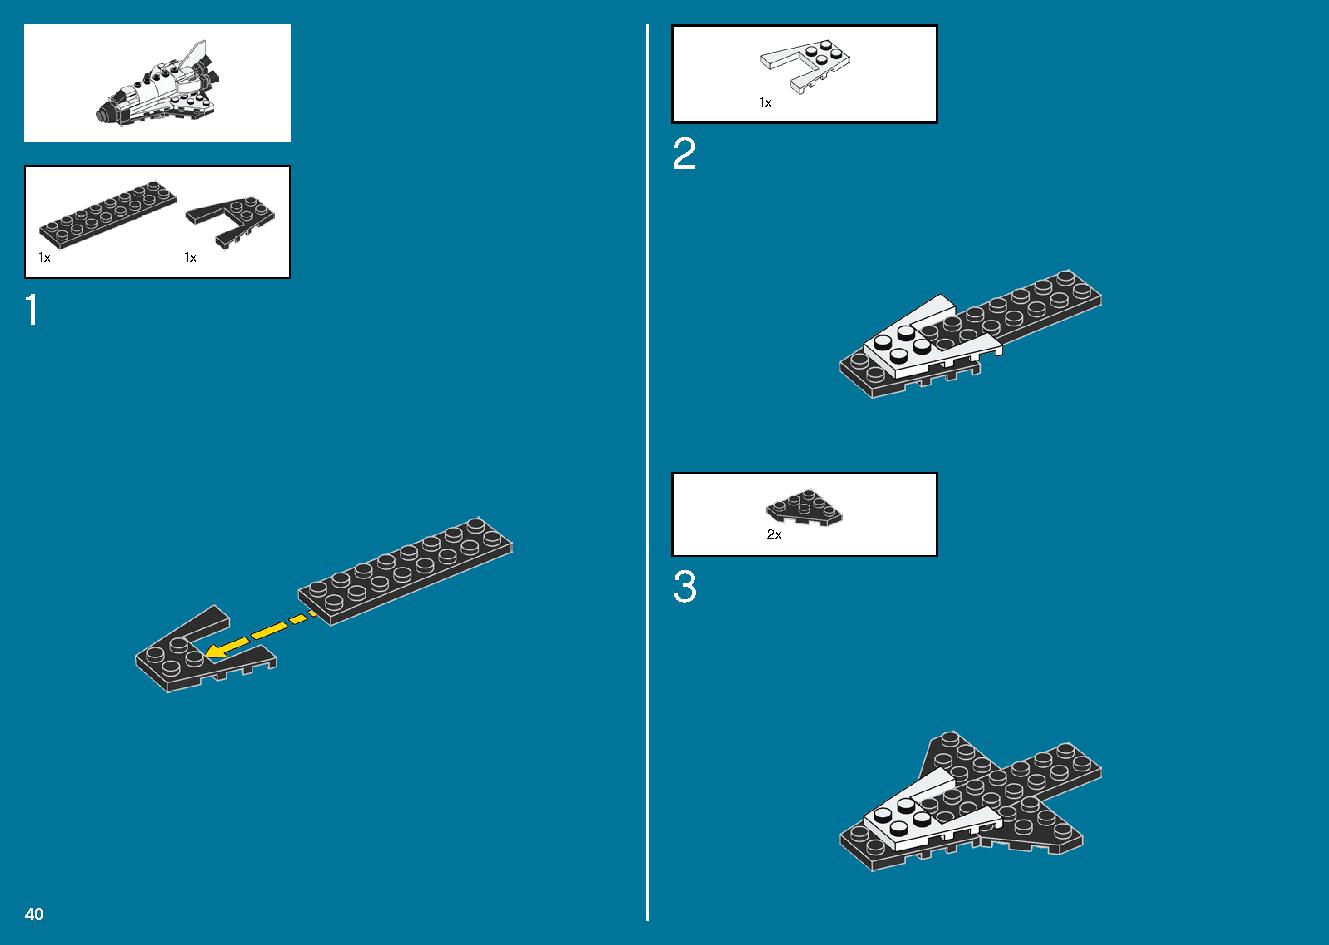 International Space Station 21321 レゴの商品情報 レゴの説明書・組立方法 40 page